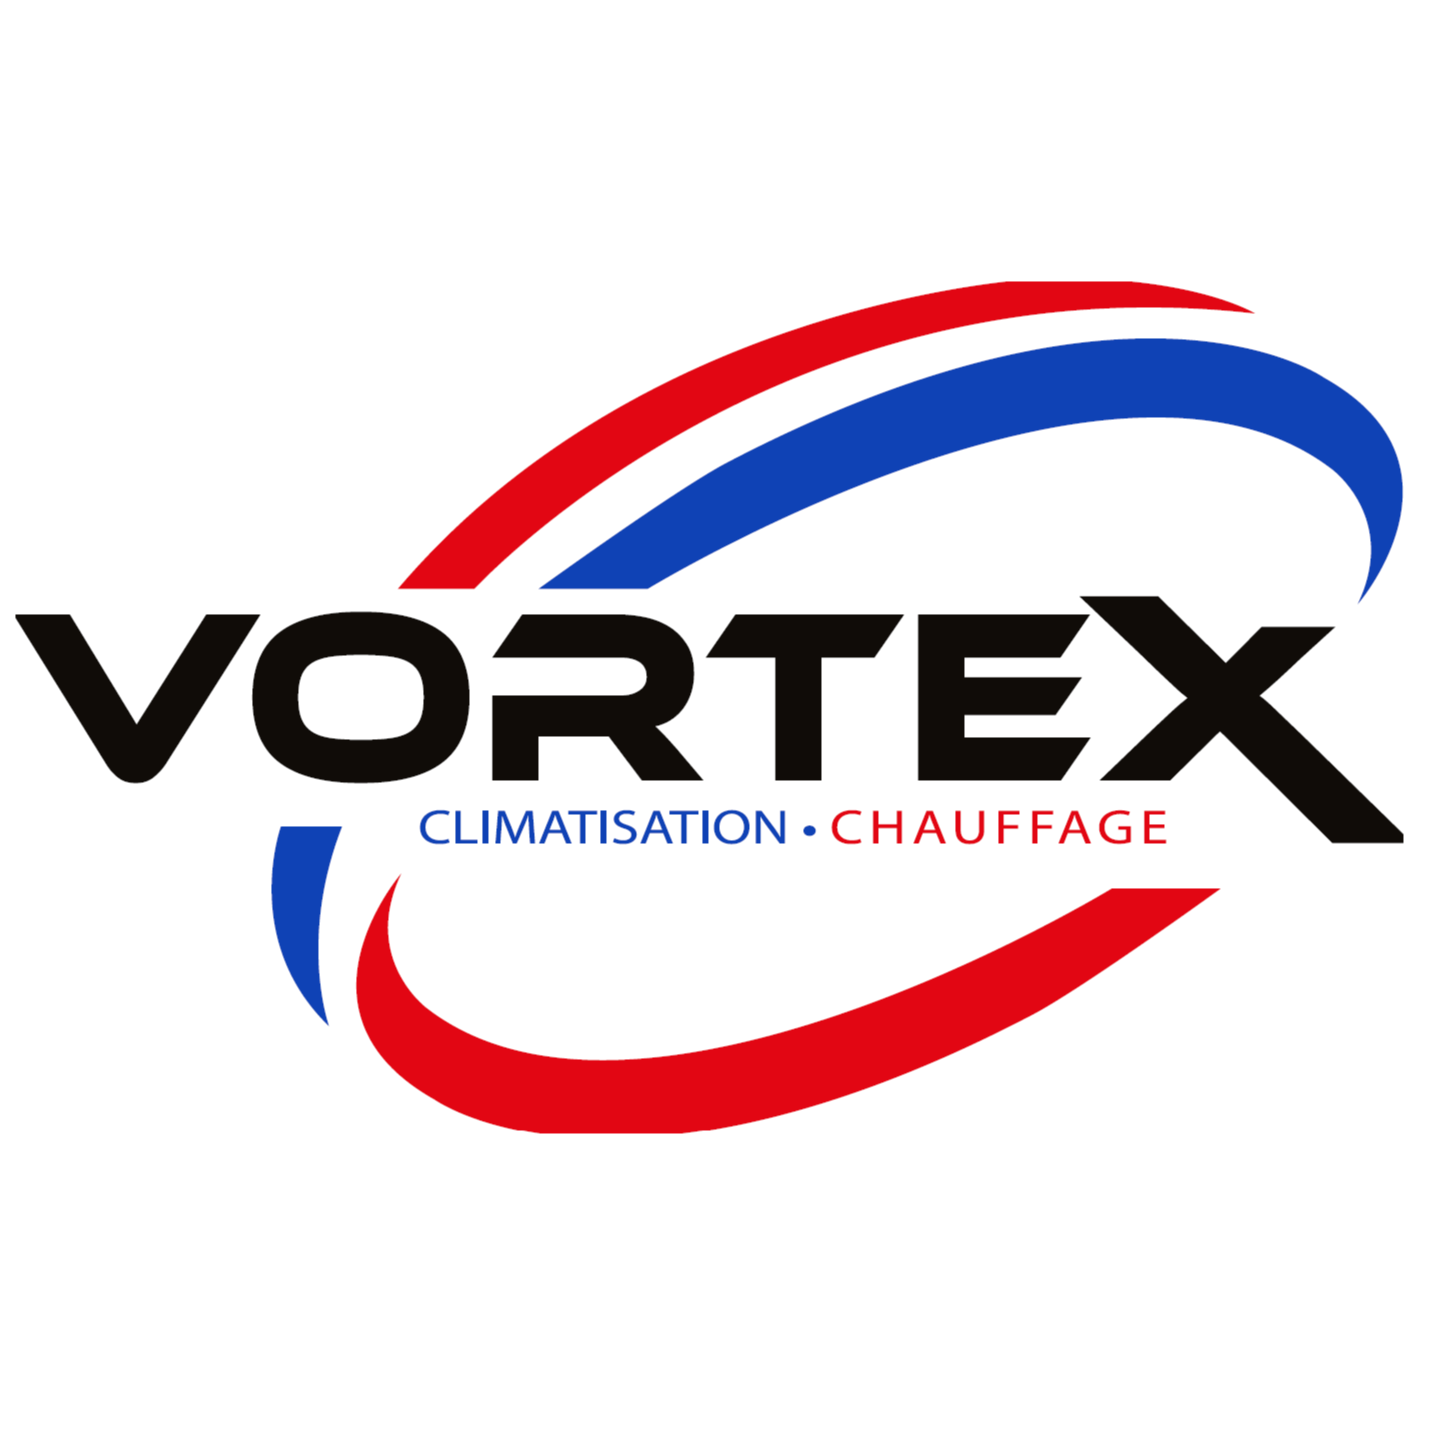 Vortex Climatisation - Installation Chauffage, Thermopompe, Air climatisé, Climatiseur Logo